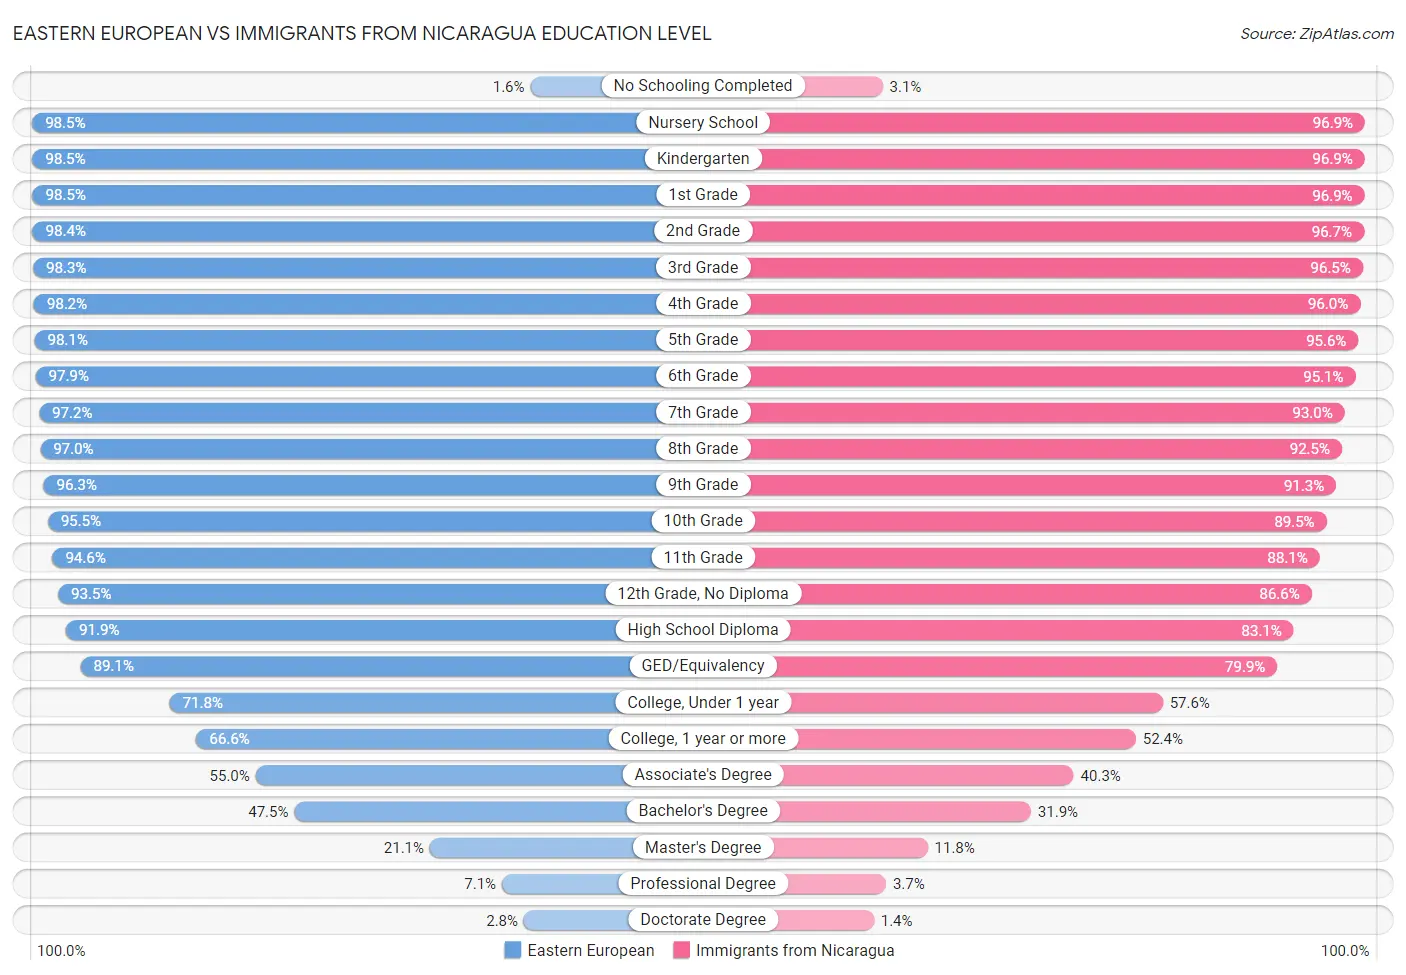 Eastern European vs Immigrants from Nicaragua Education Level